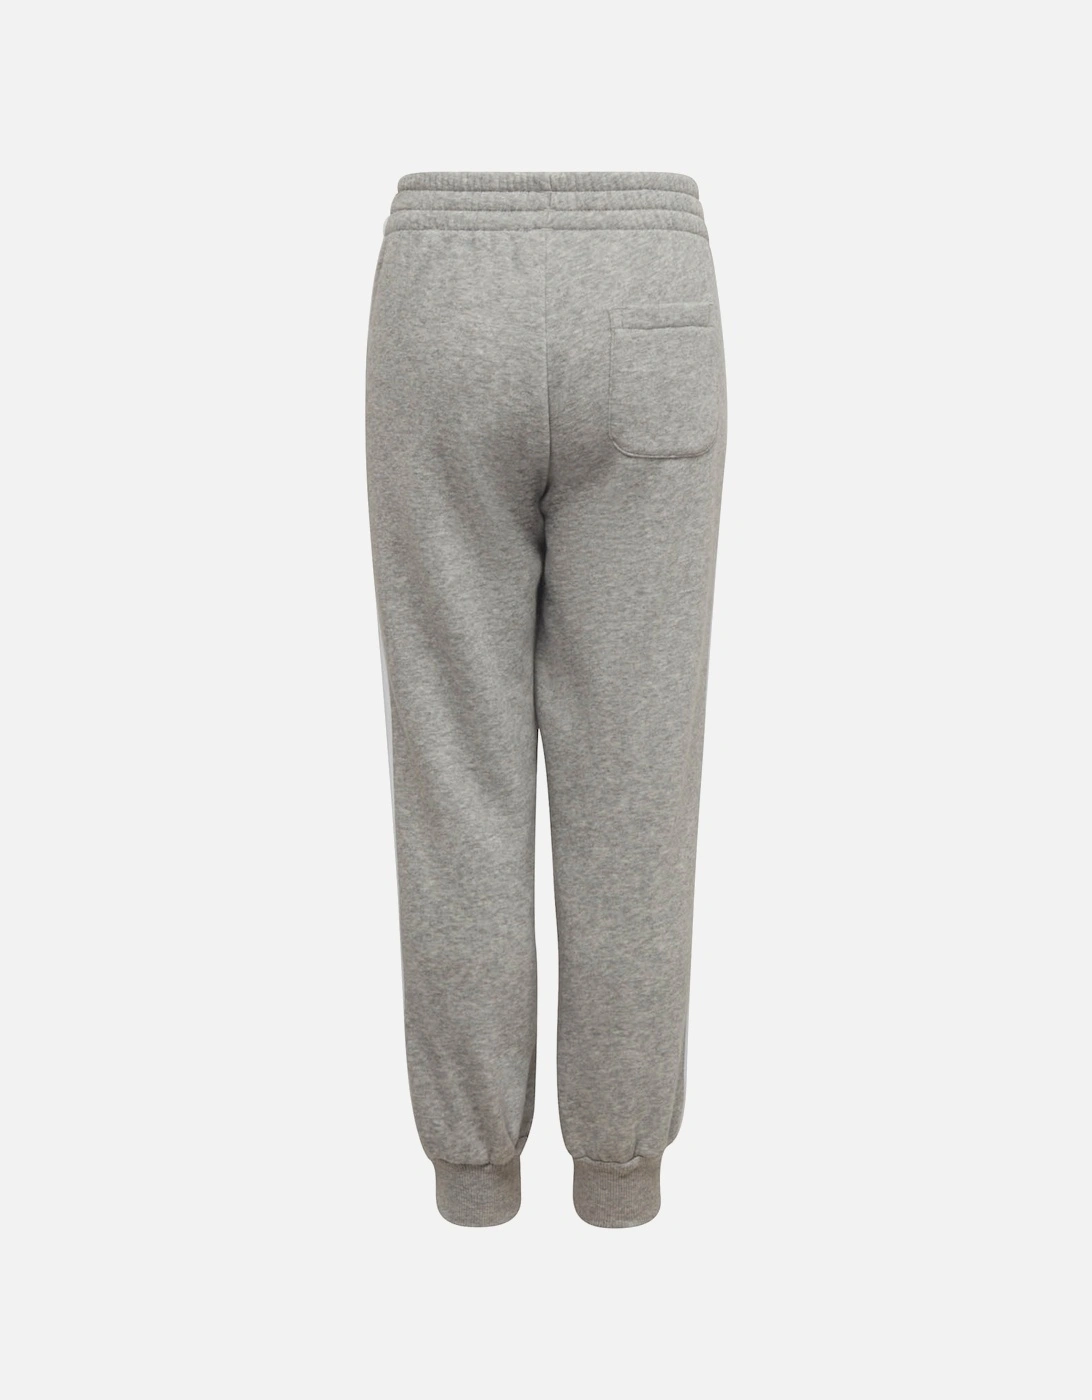 Juniors 3 Stripe Jogger Pants (Grey)